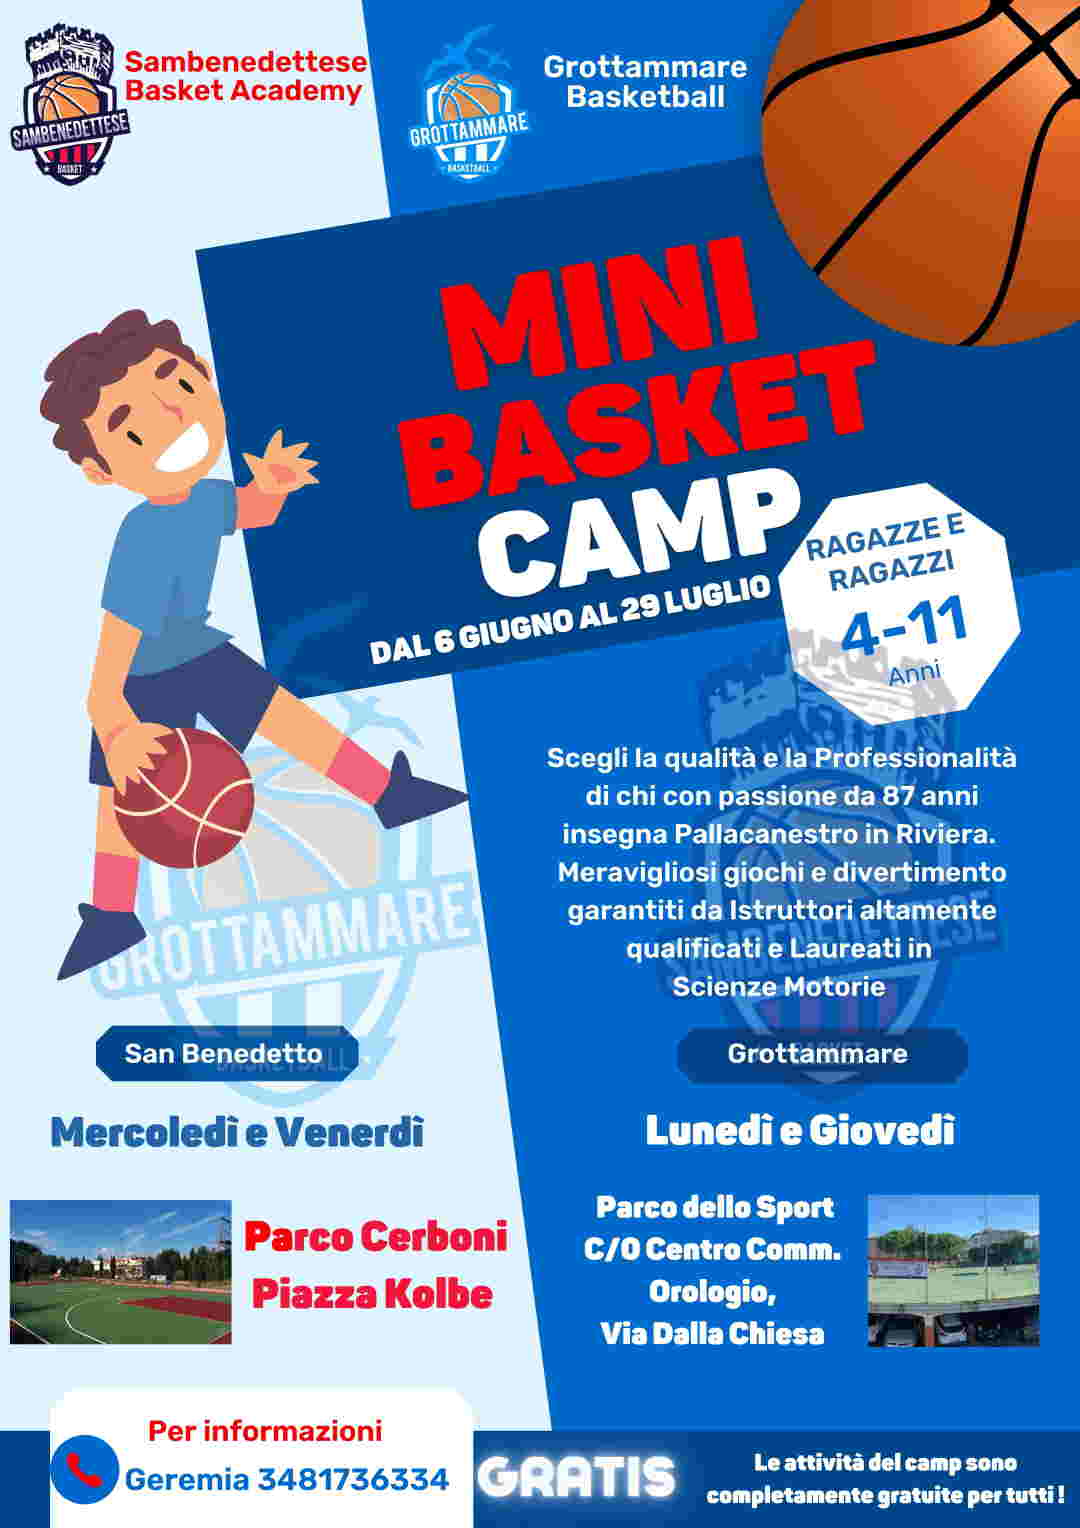 Torna il Minibasket Camp in Riviera